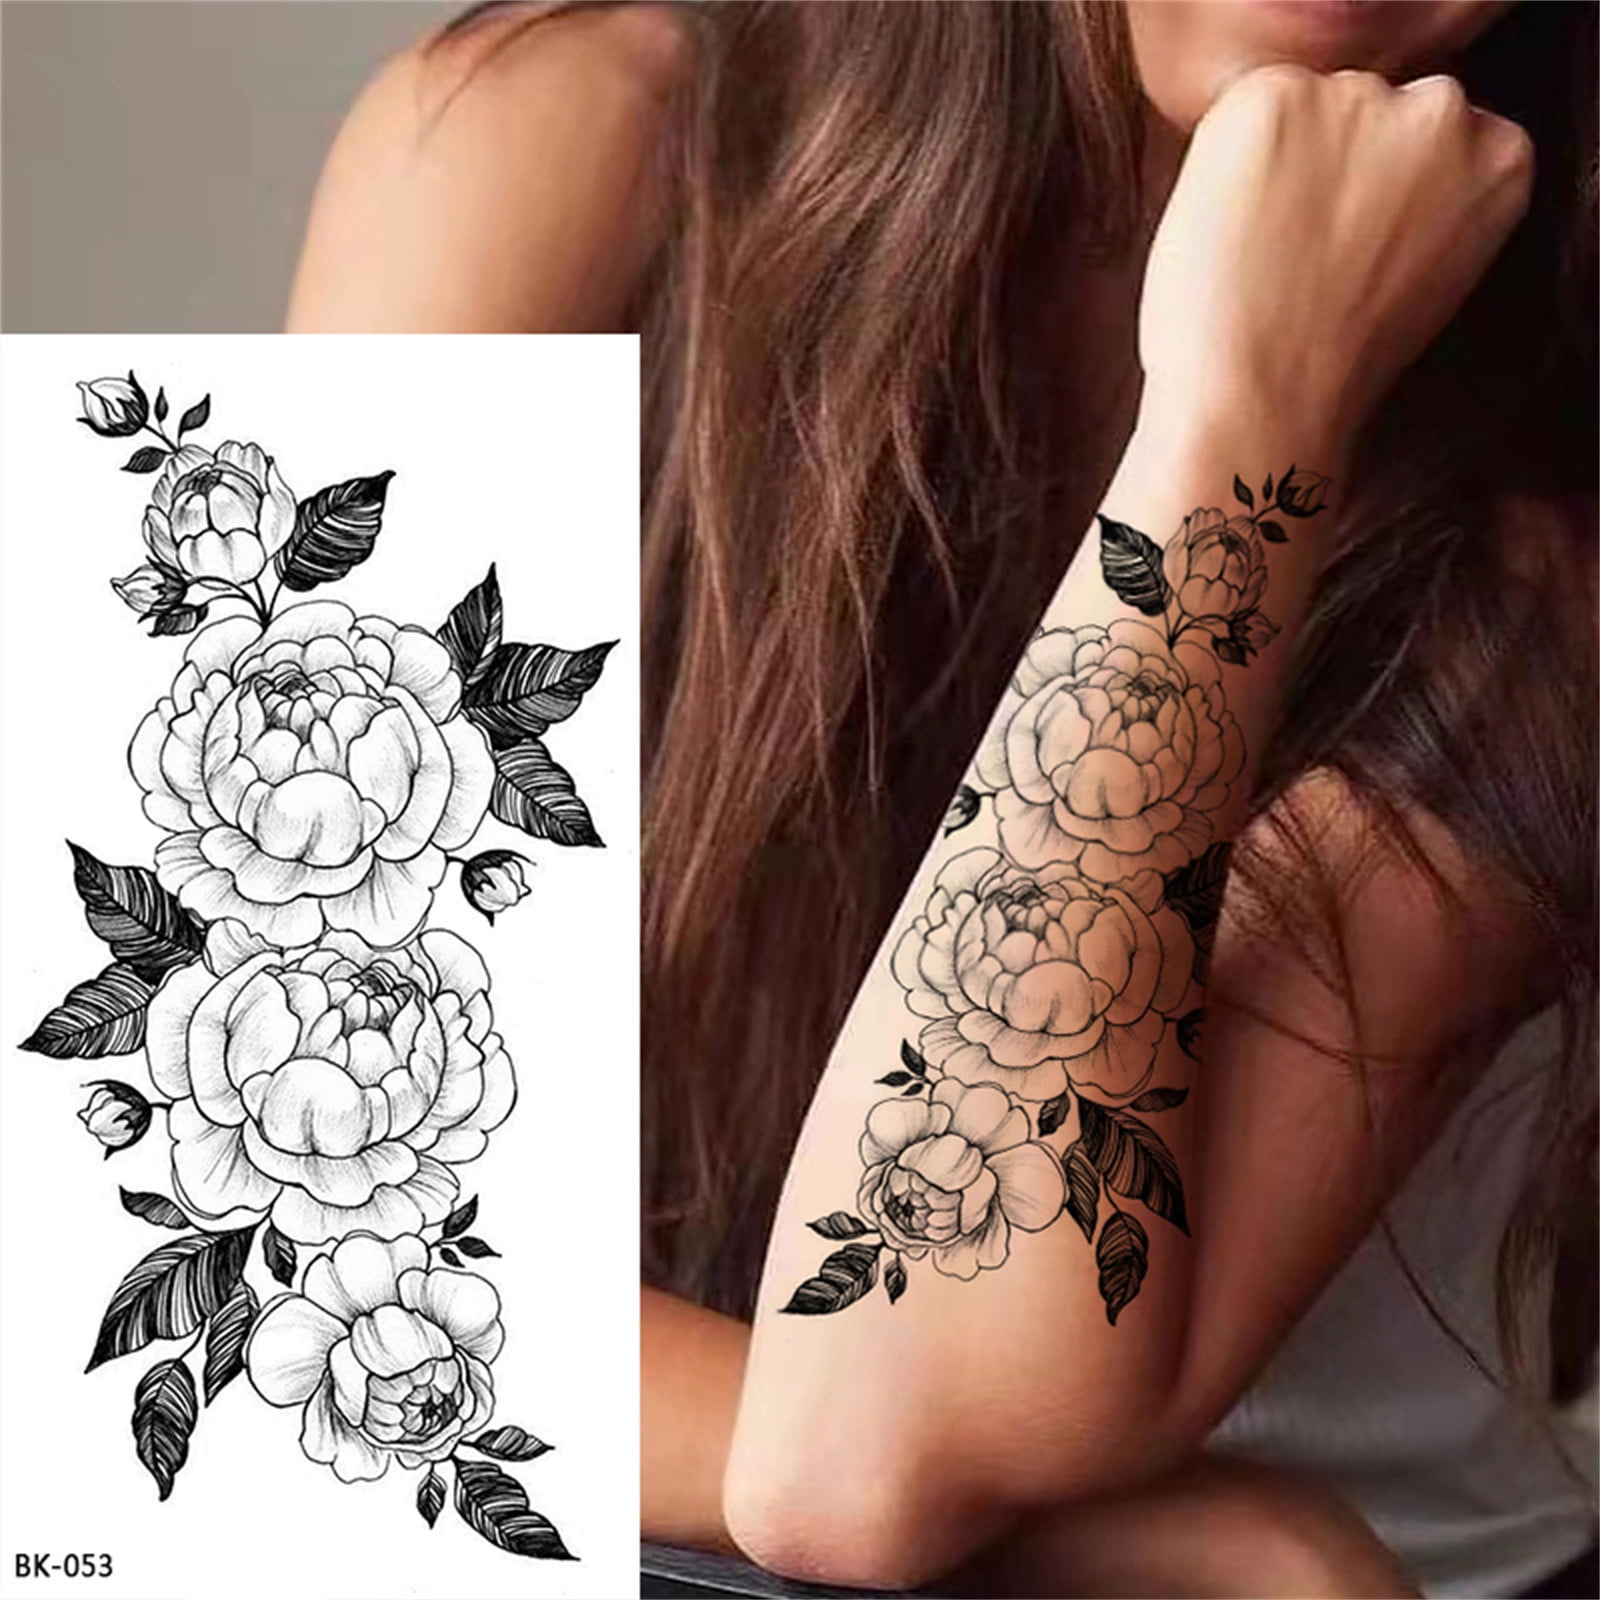 Abstract Rose Tattoo by David Mushaney : Tattoos